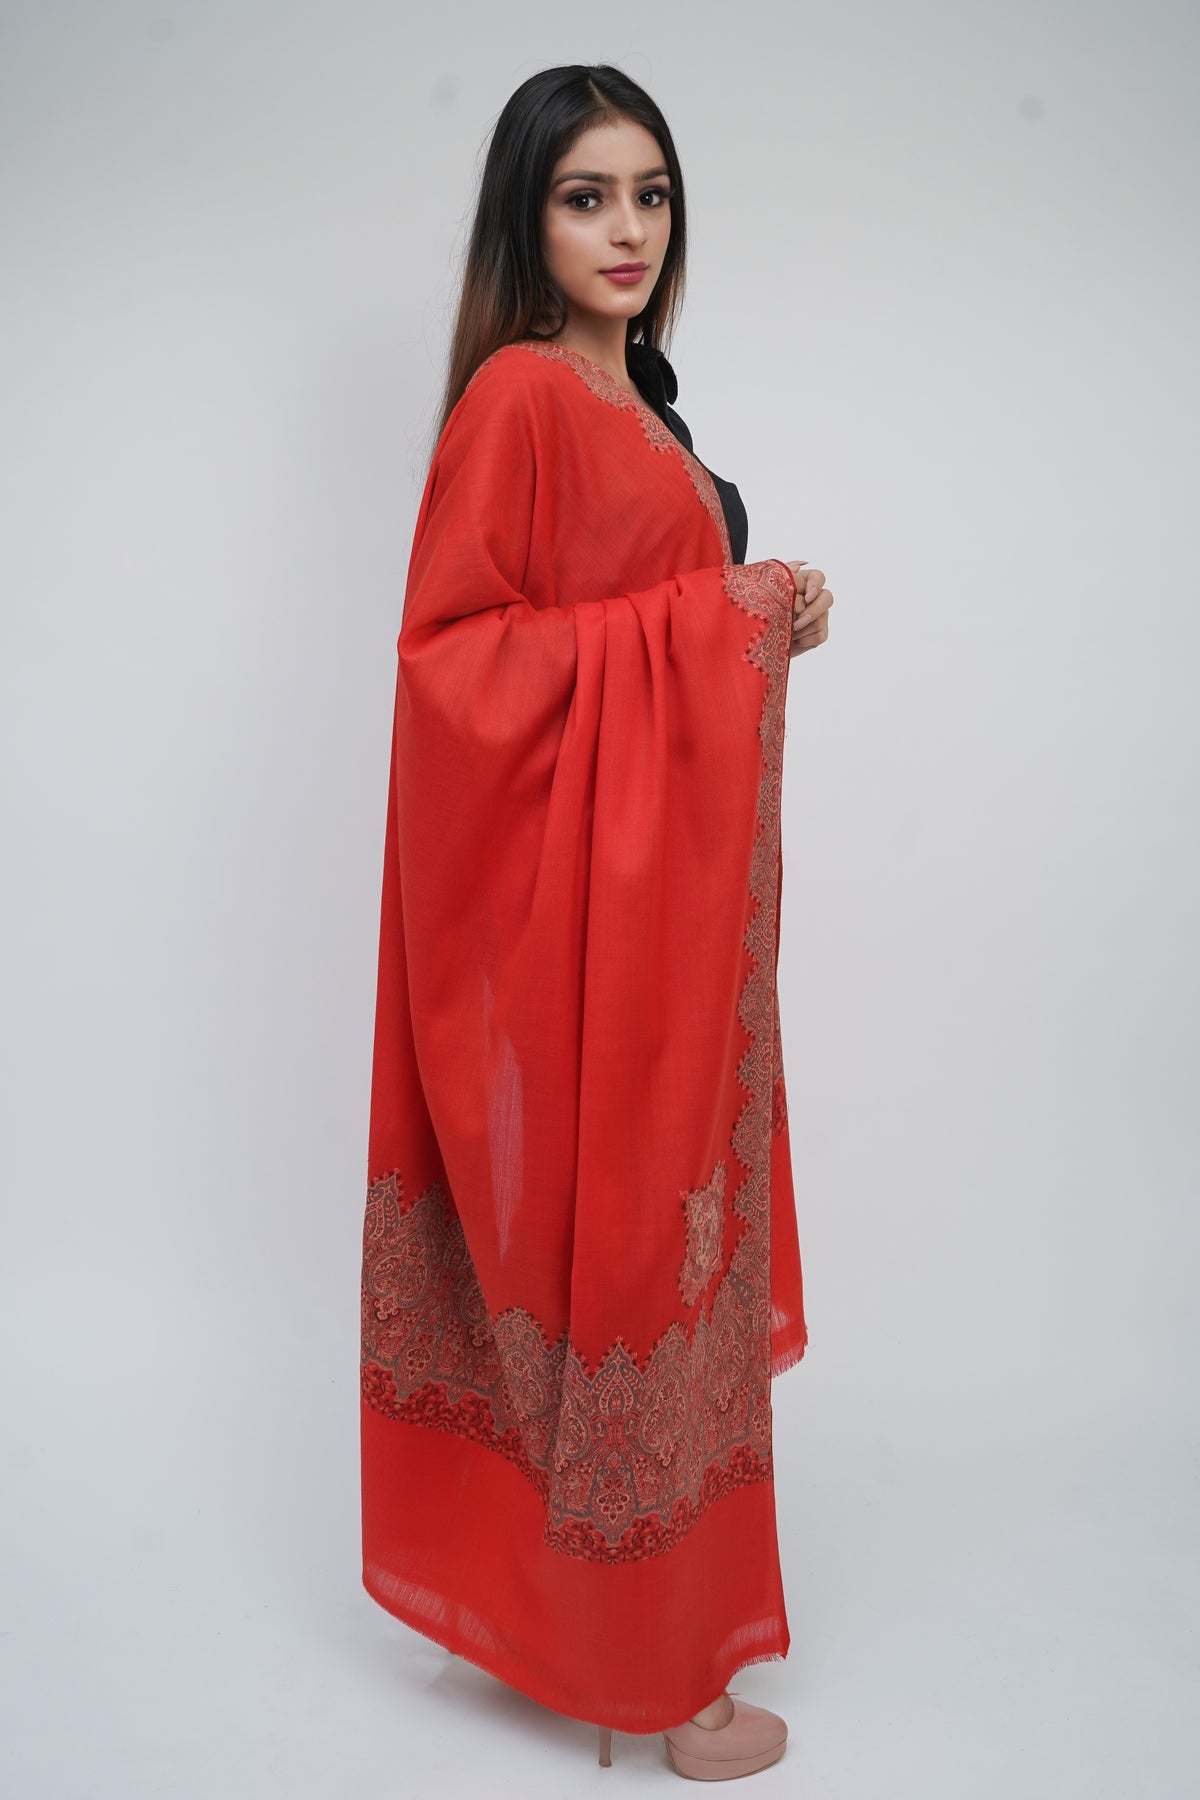 Fine Wool Jacquard Woven  Kashmiri Soft & Warm Red Shawl